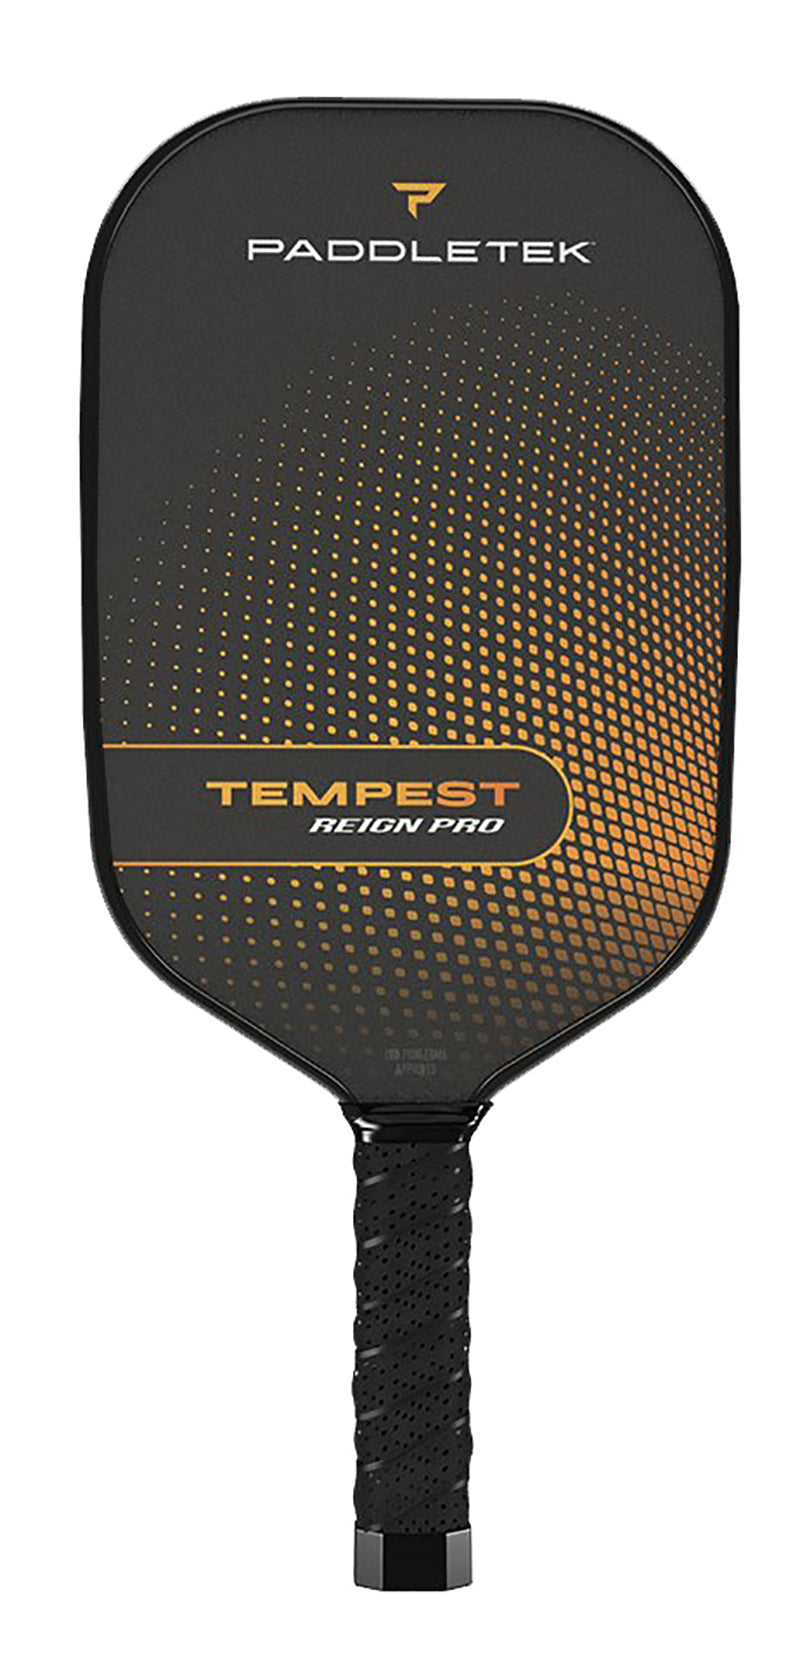 Paddletek Tempest Reign Pro Pickleball Paddle (Thin Grip) (Yellow) vid-40174018887767